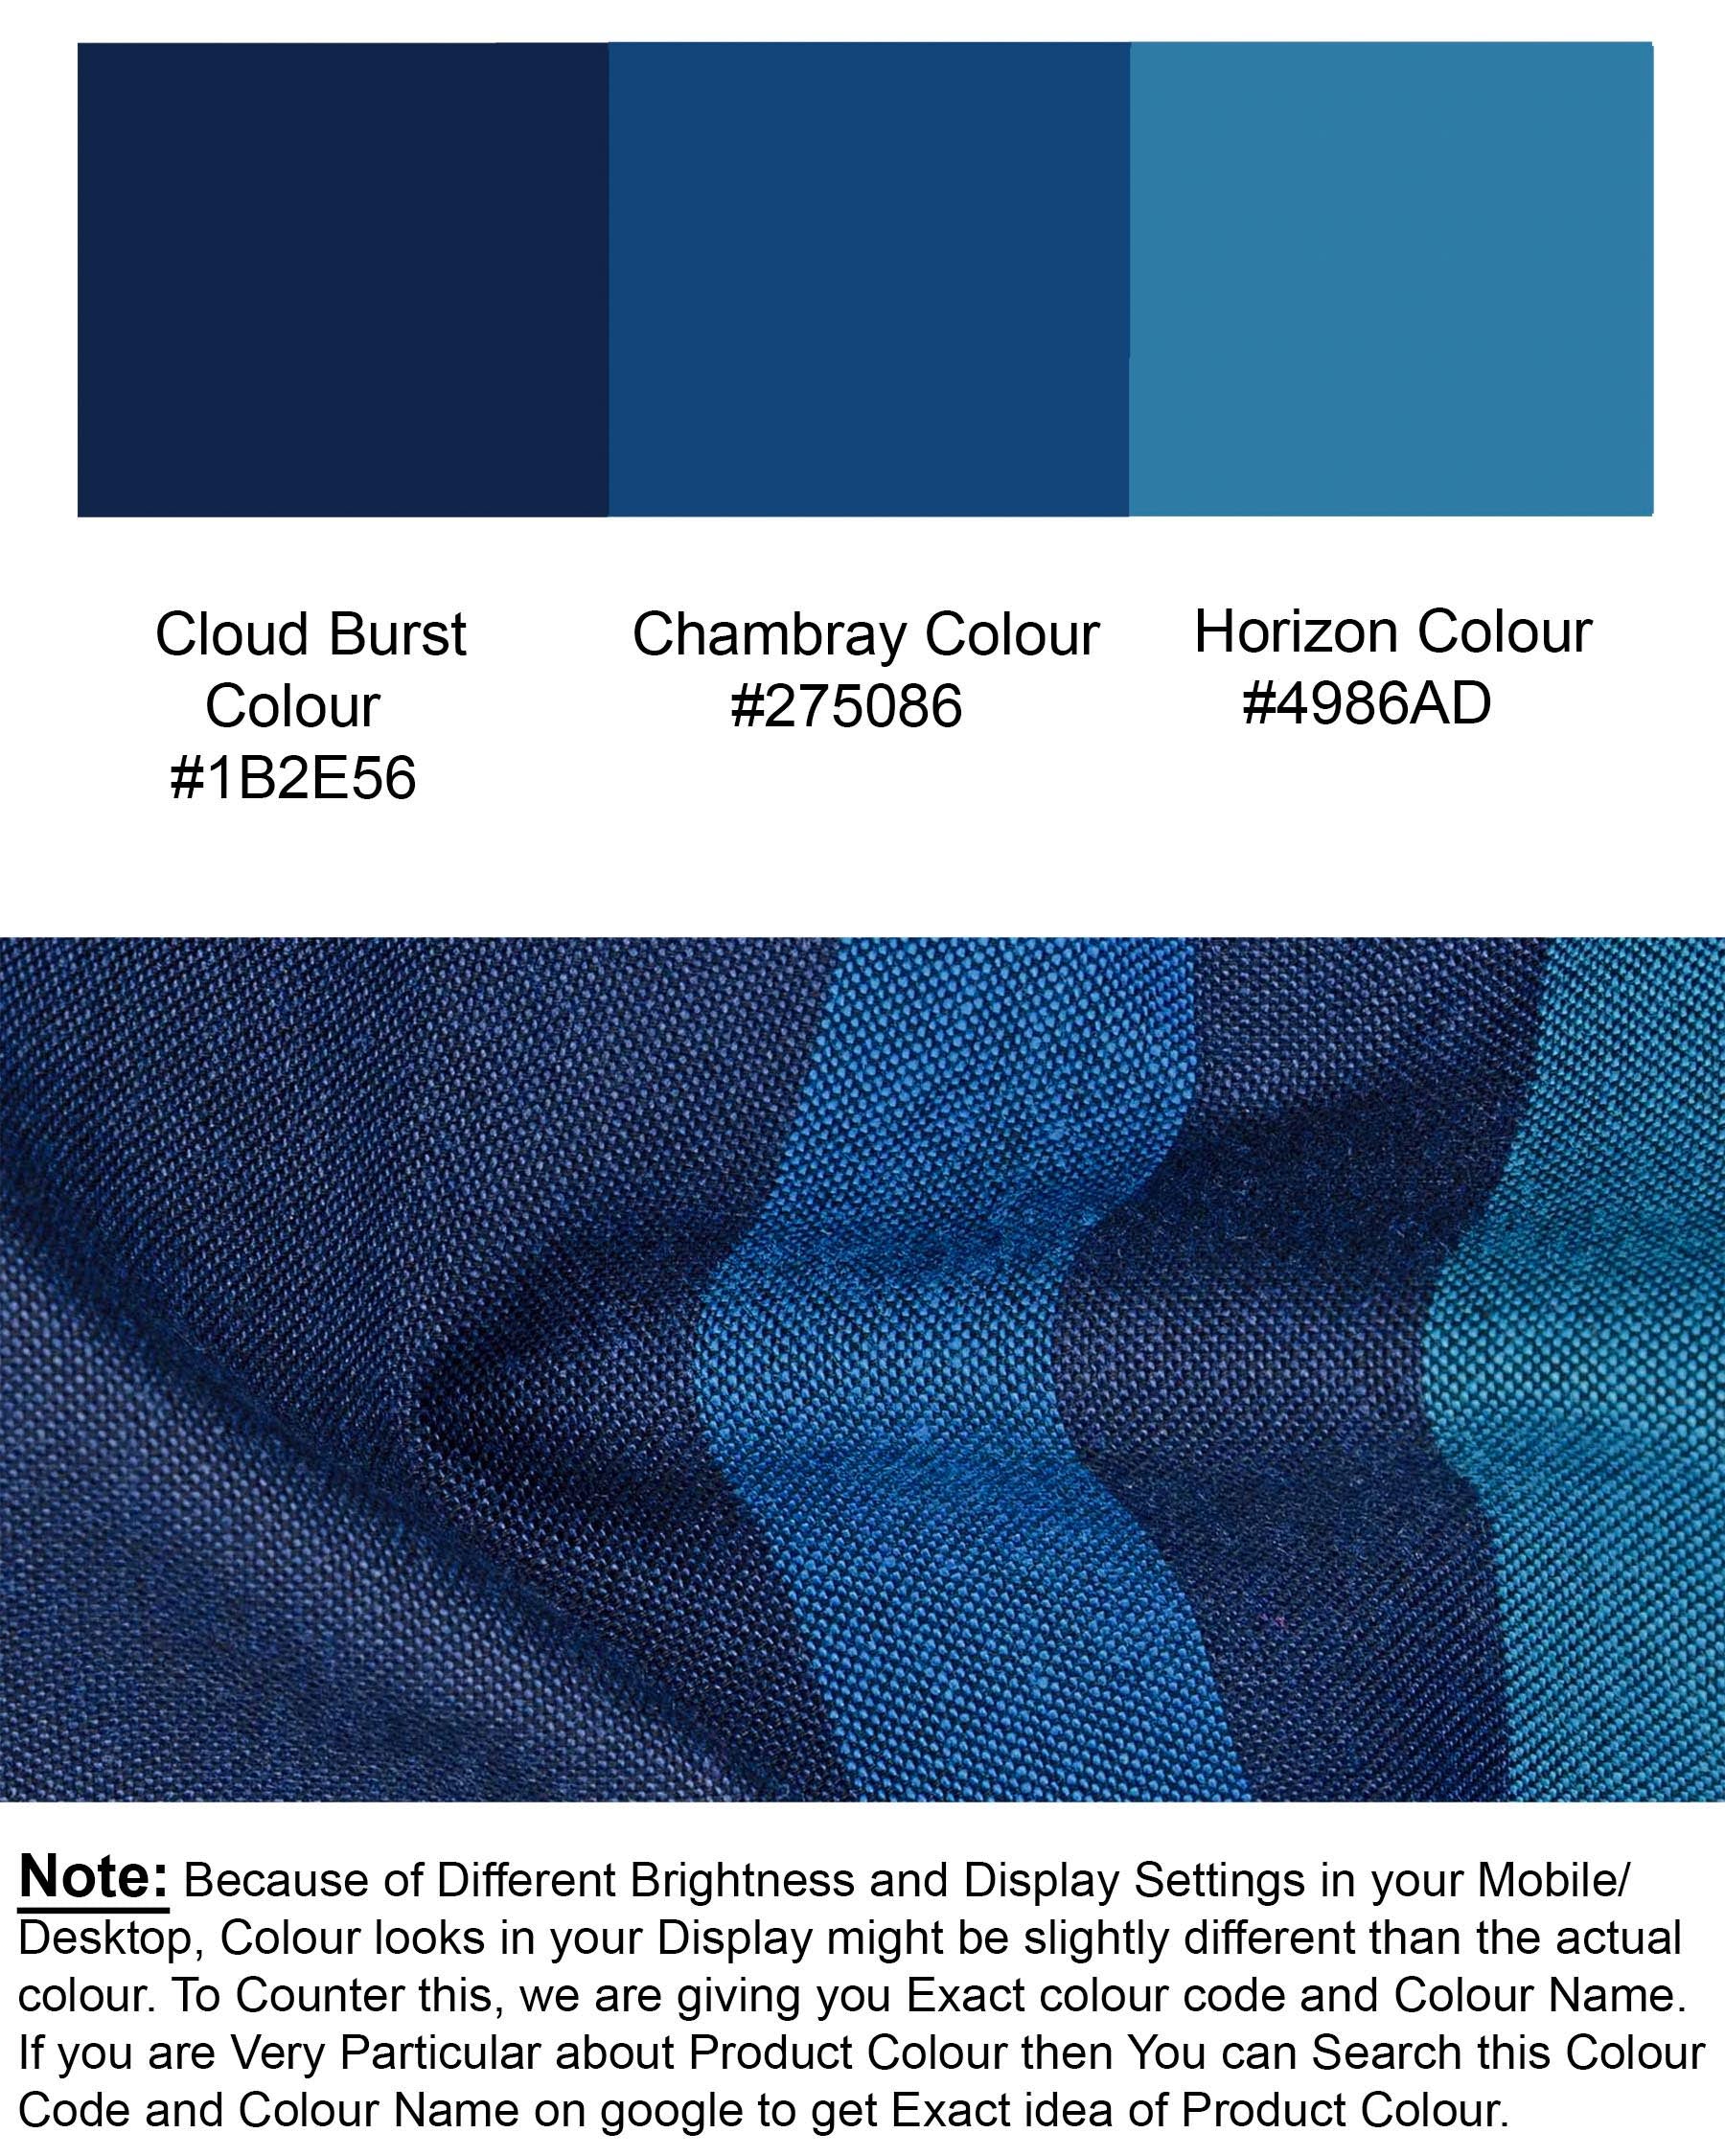 Cloud Burst and Chambray Blue Striped Royal Oxford Shirt 6833-38,6833-38,6833-39,6833-39,6833-40,6833-40,6833-42,6833-42,6833-44,6833-44,6833-46,6833-46,6833-48,6833-48,6833-50,6833-50,6833-52,6833-52